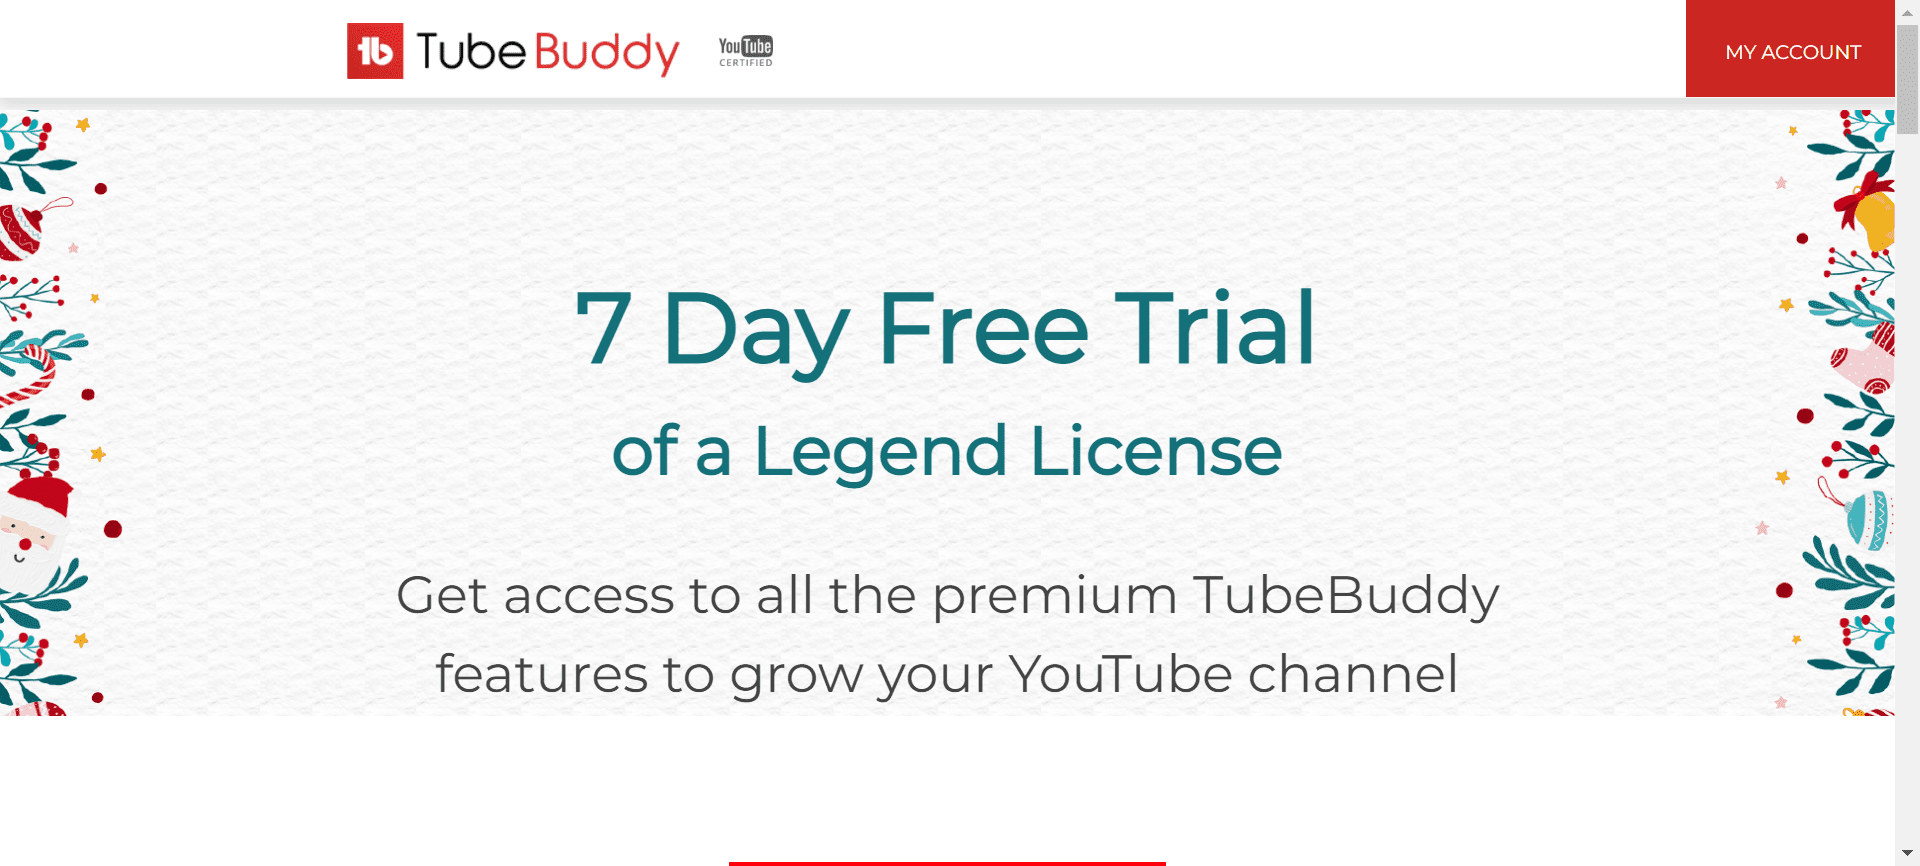 TubeBuddy-Free-trial-7-Day-Legend